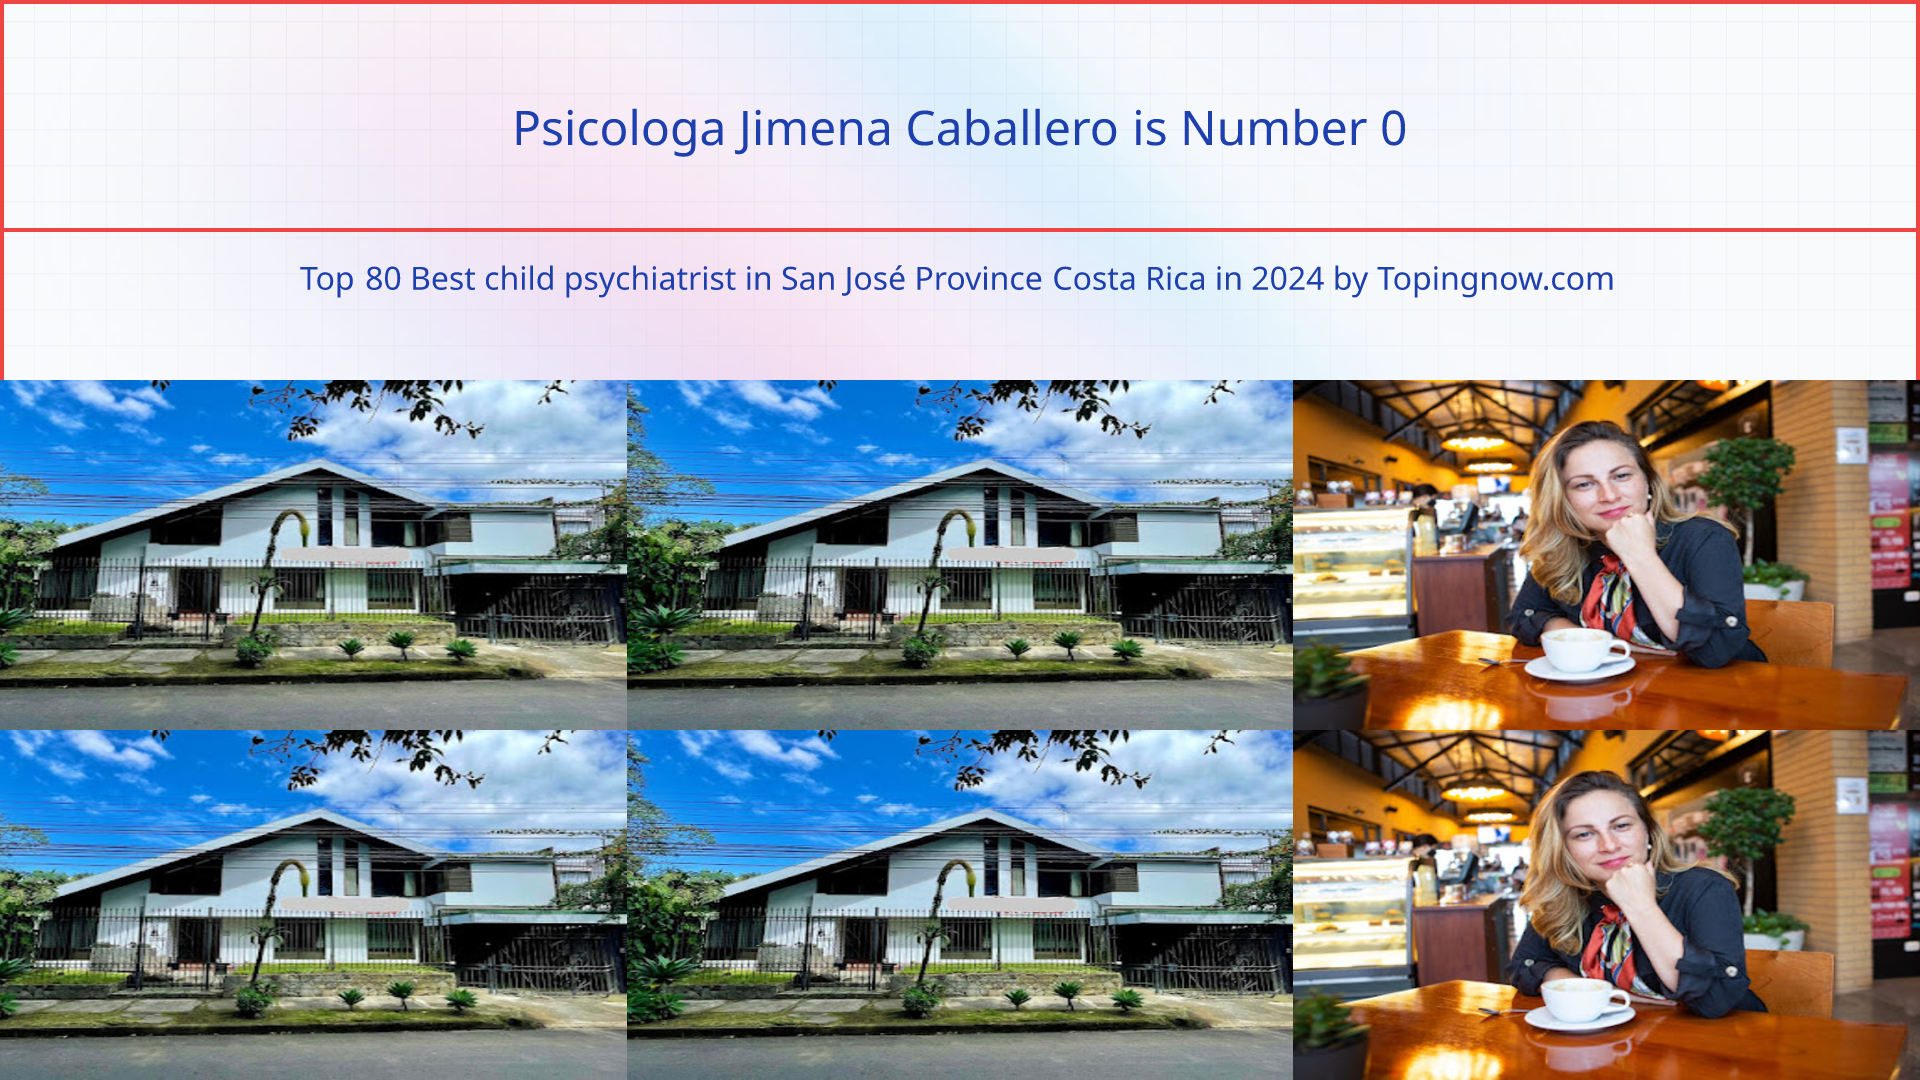 Psicologa Jimena Caballero: Top 80 Best child psychiatrist in San José Province Costa Rica in 2024